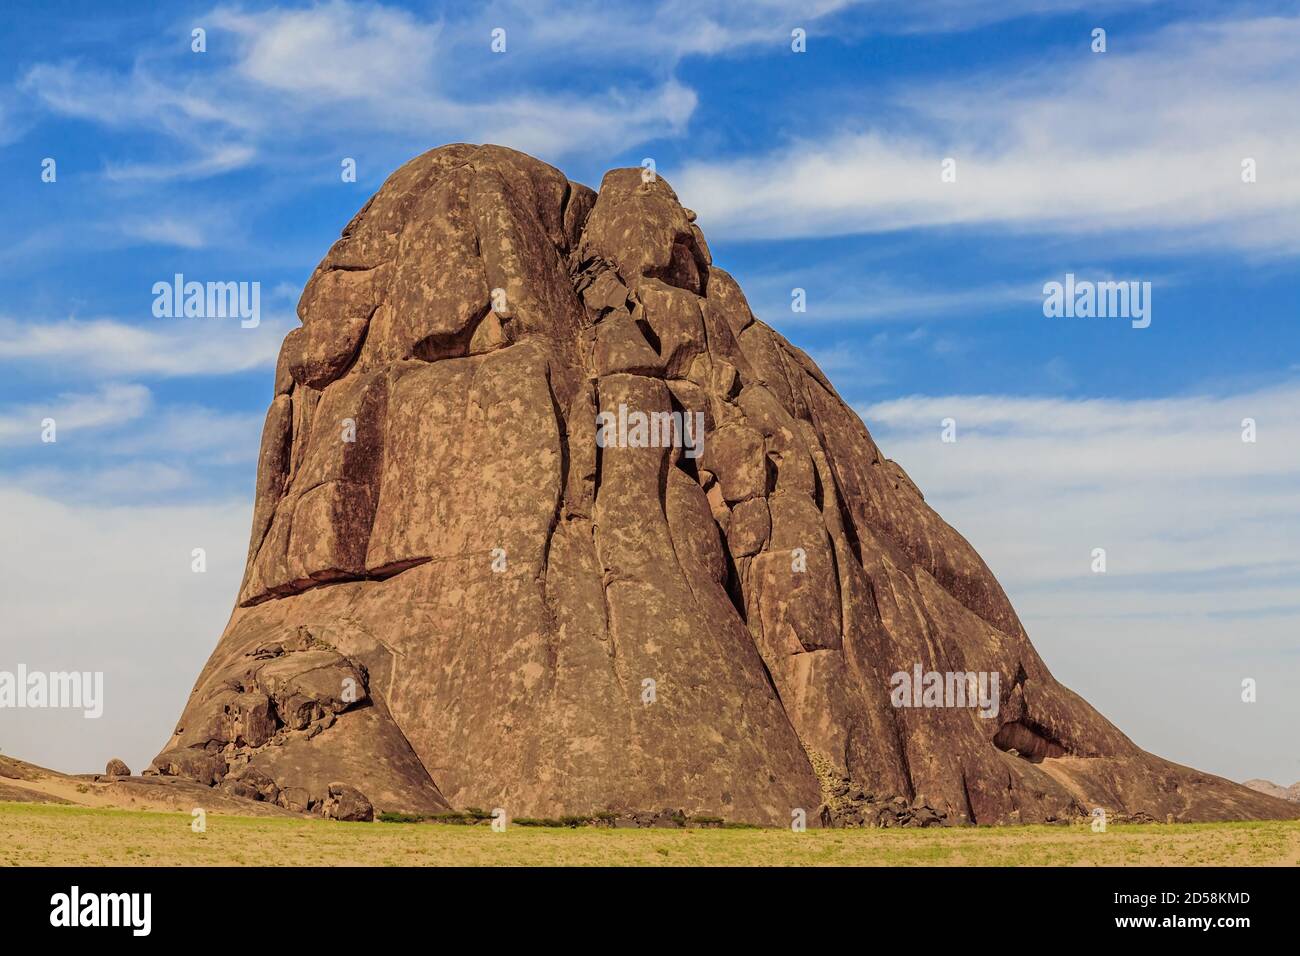 Dramatic rock formation in the desert, Saudi Arabia Stock Photo